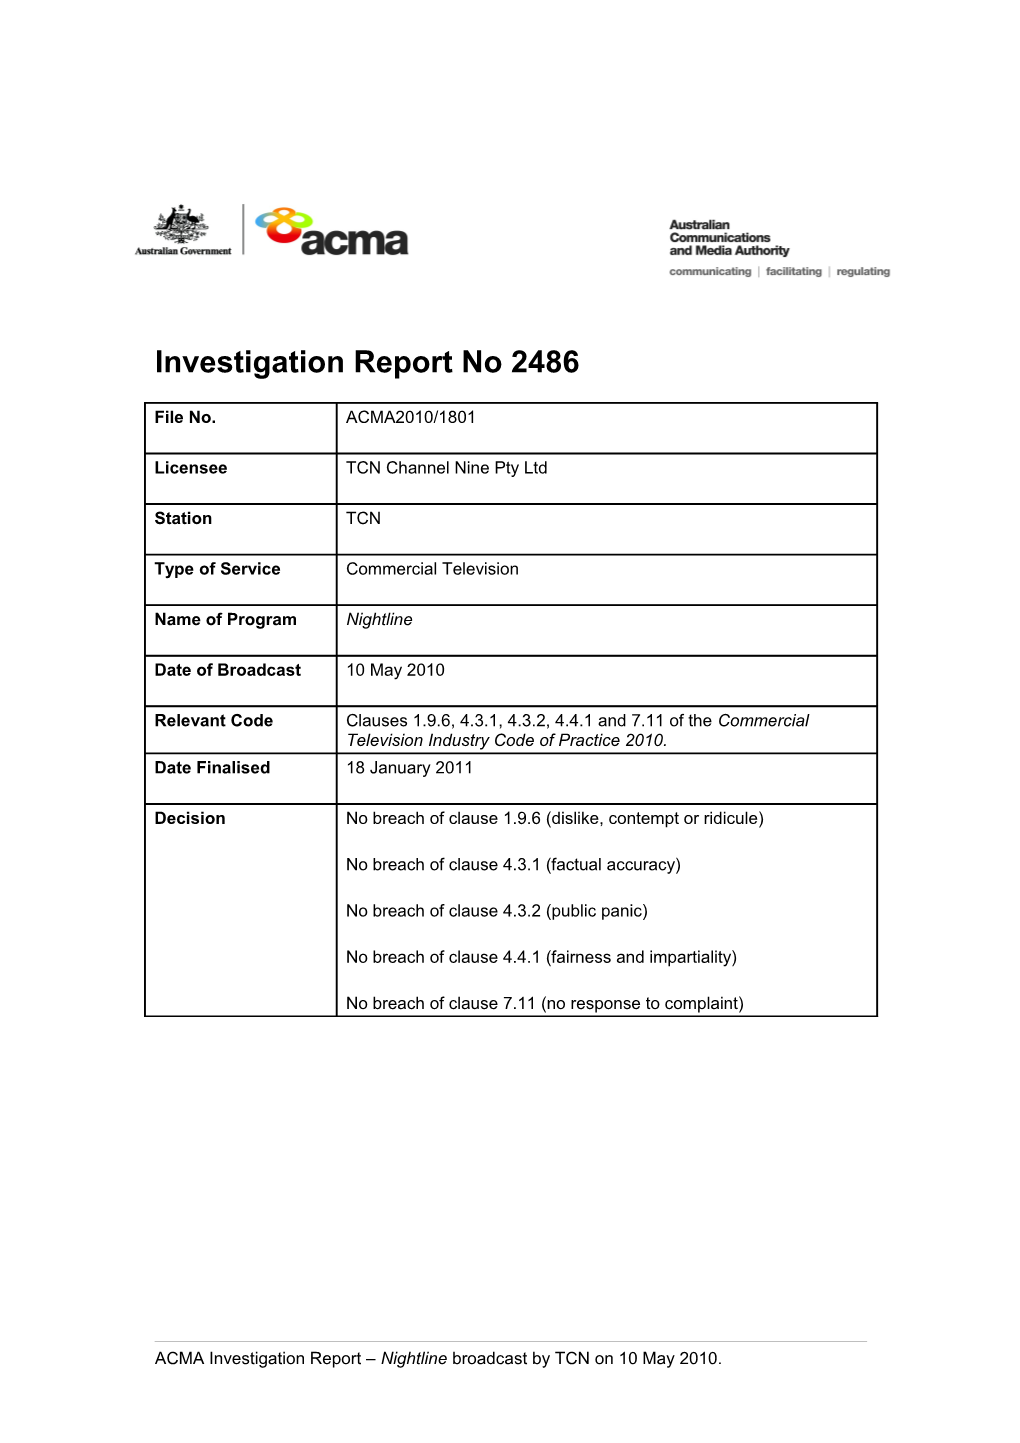 TCN 9 - ACMA Investigation Report 2486